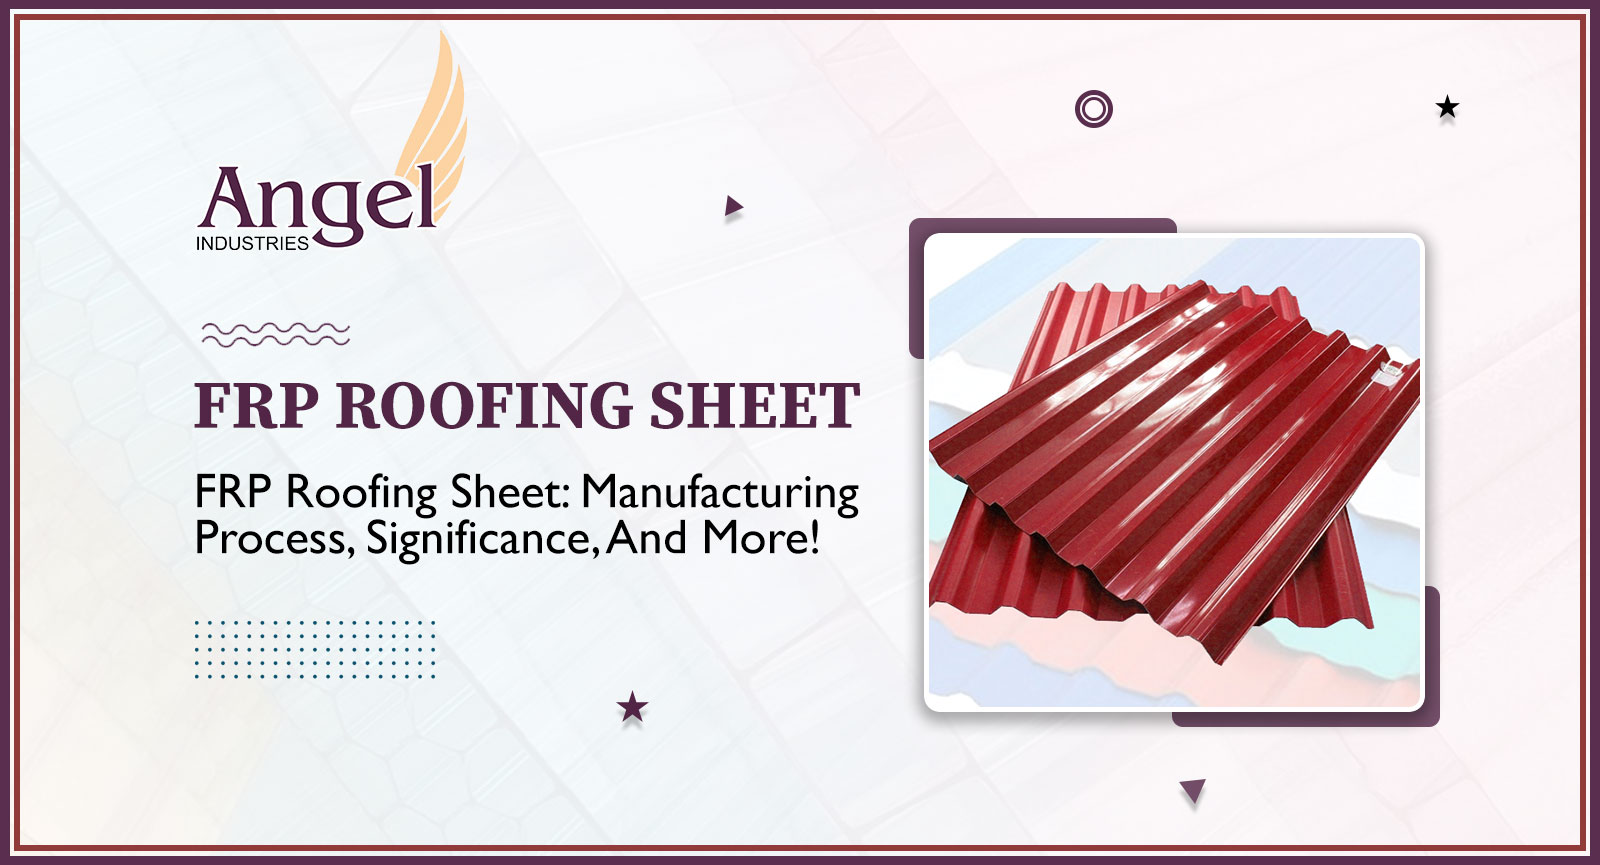 Latest Blog - FRP Roofing Sheet - Angel Industries Pvt Ltd